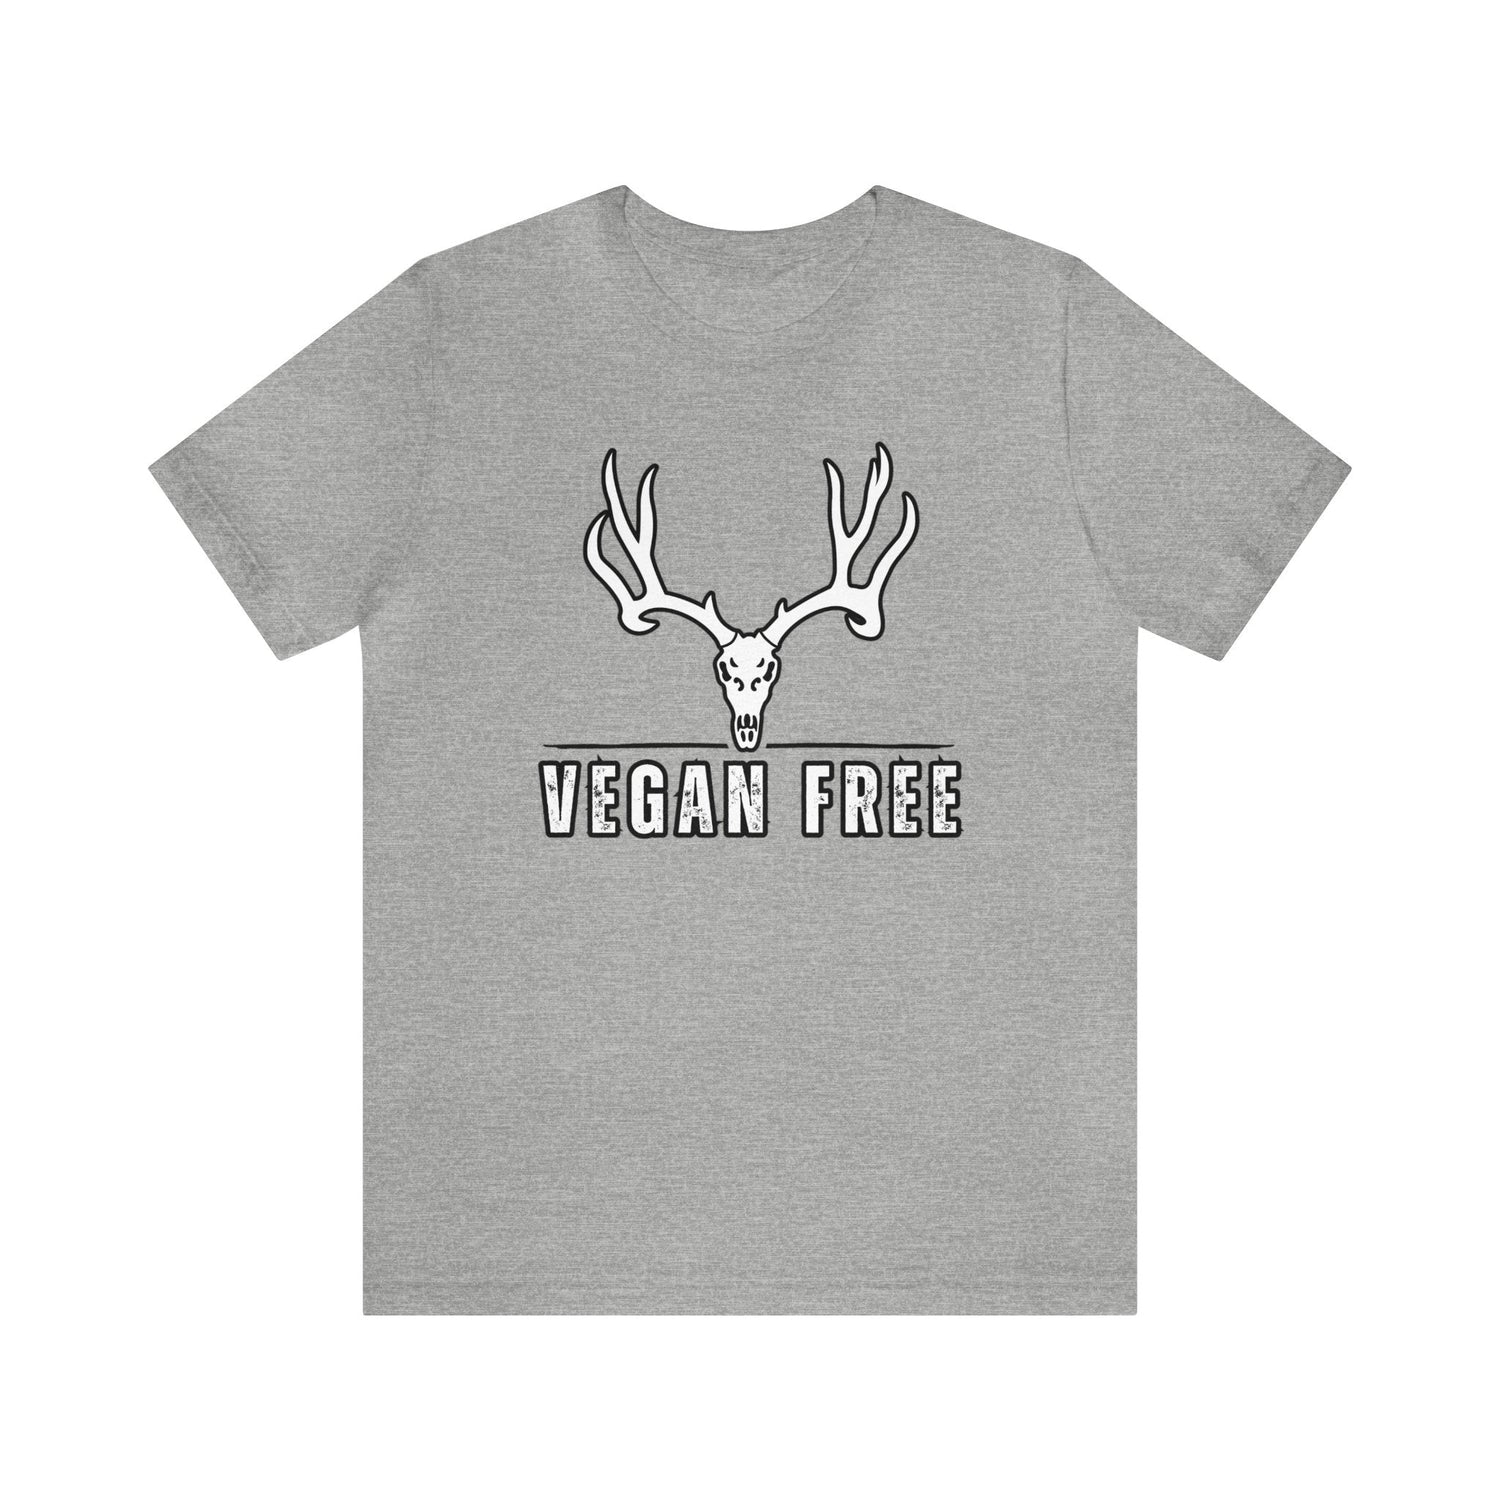 Western deer hunting t-shirt, color light grey, front design placement